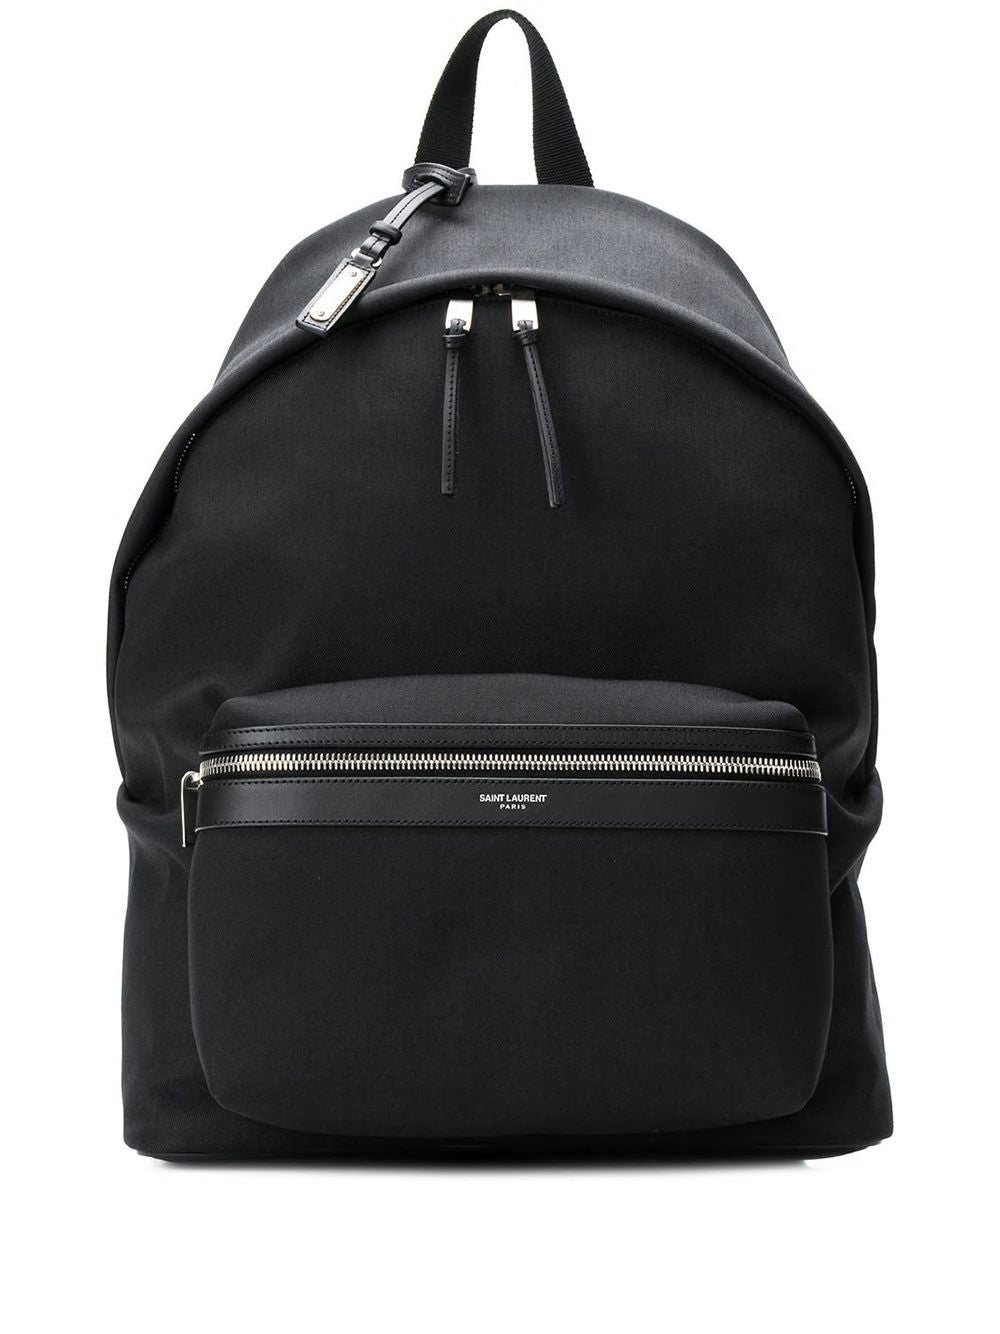 SAINT LAURENT Black Leather-Trim City Backpack for Men